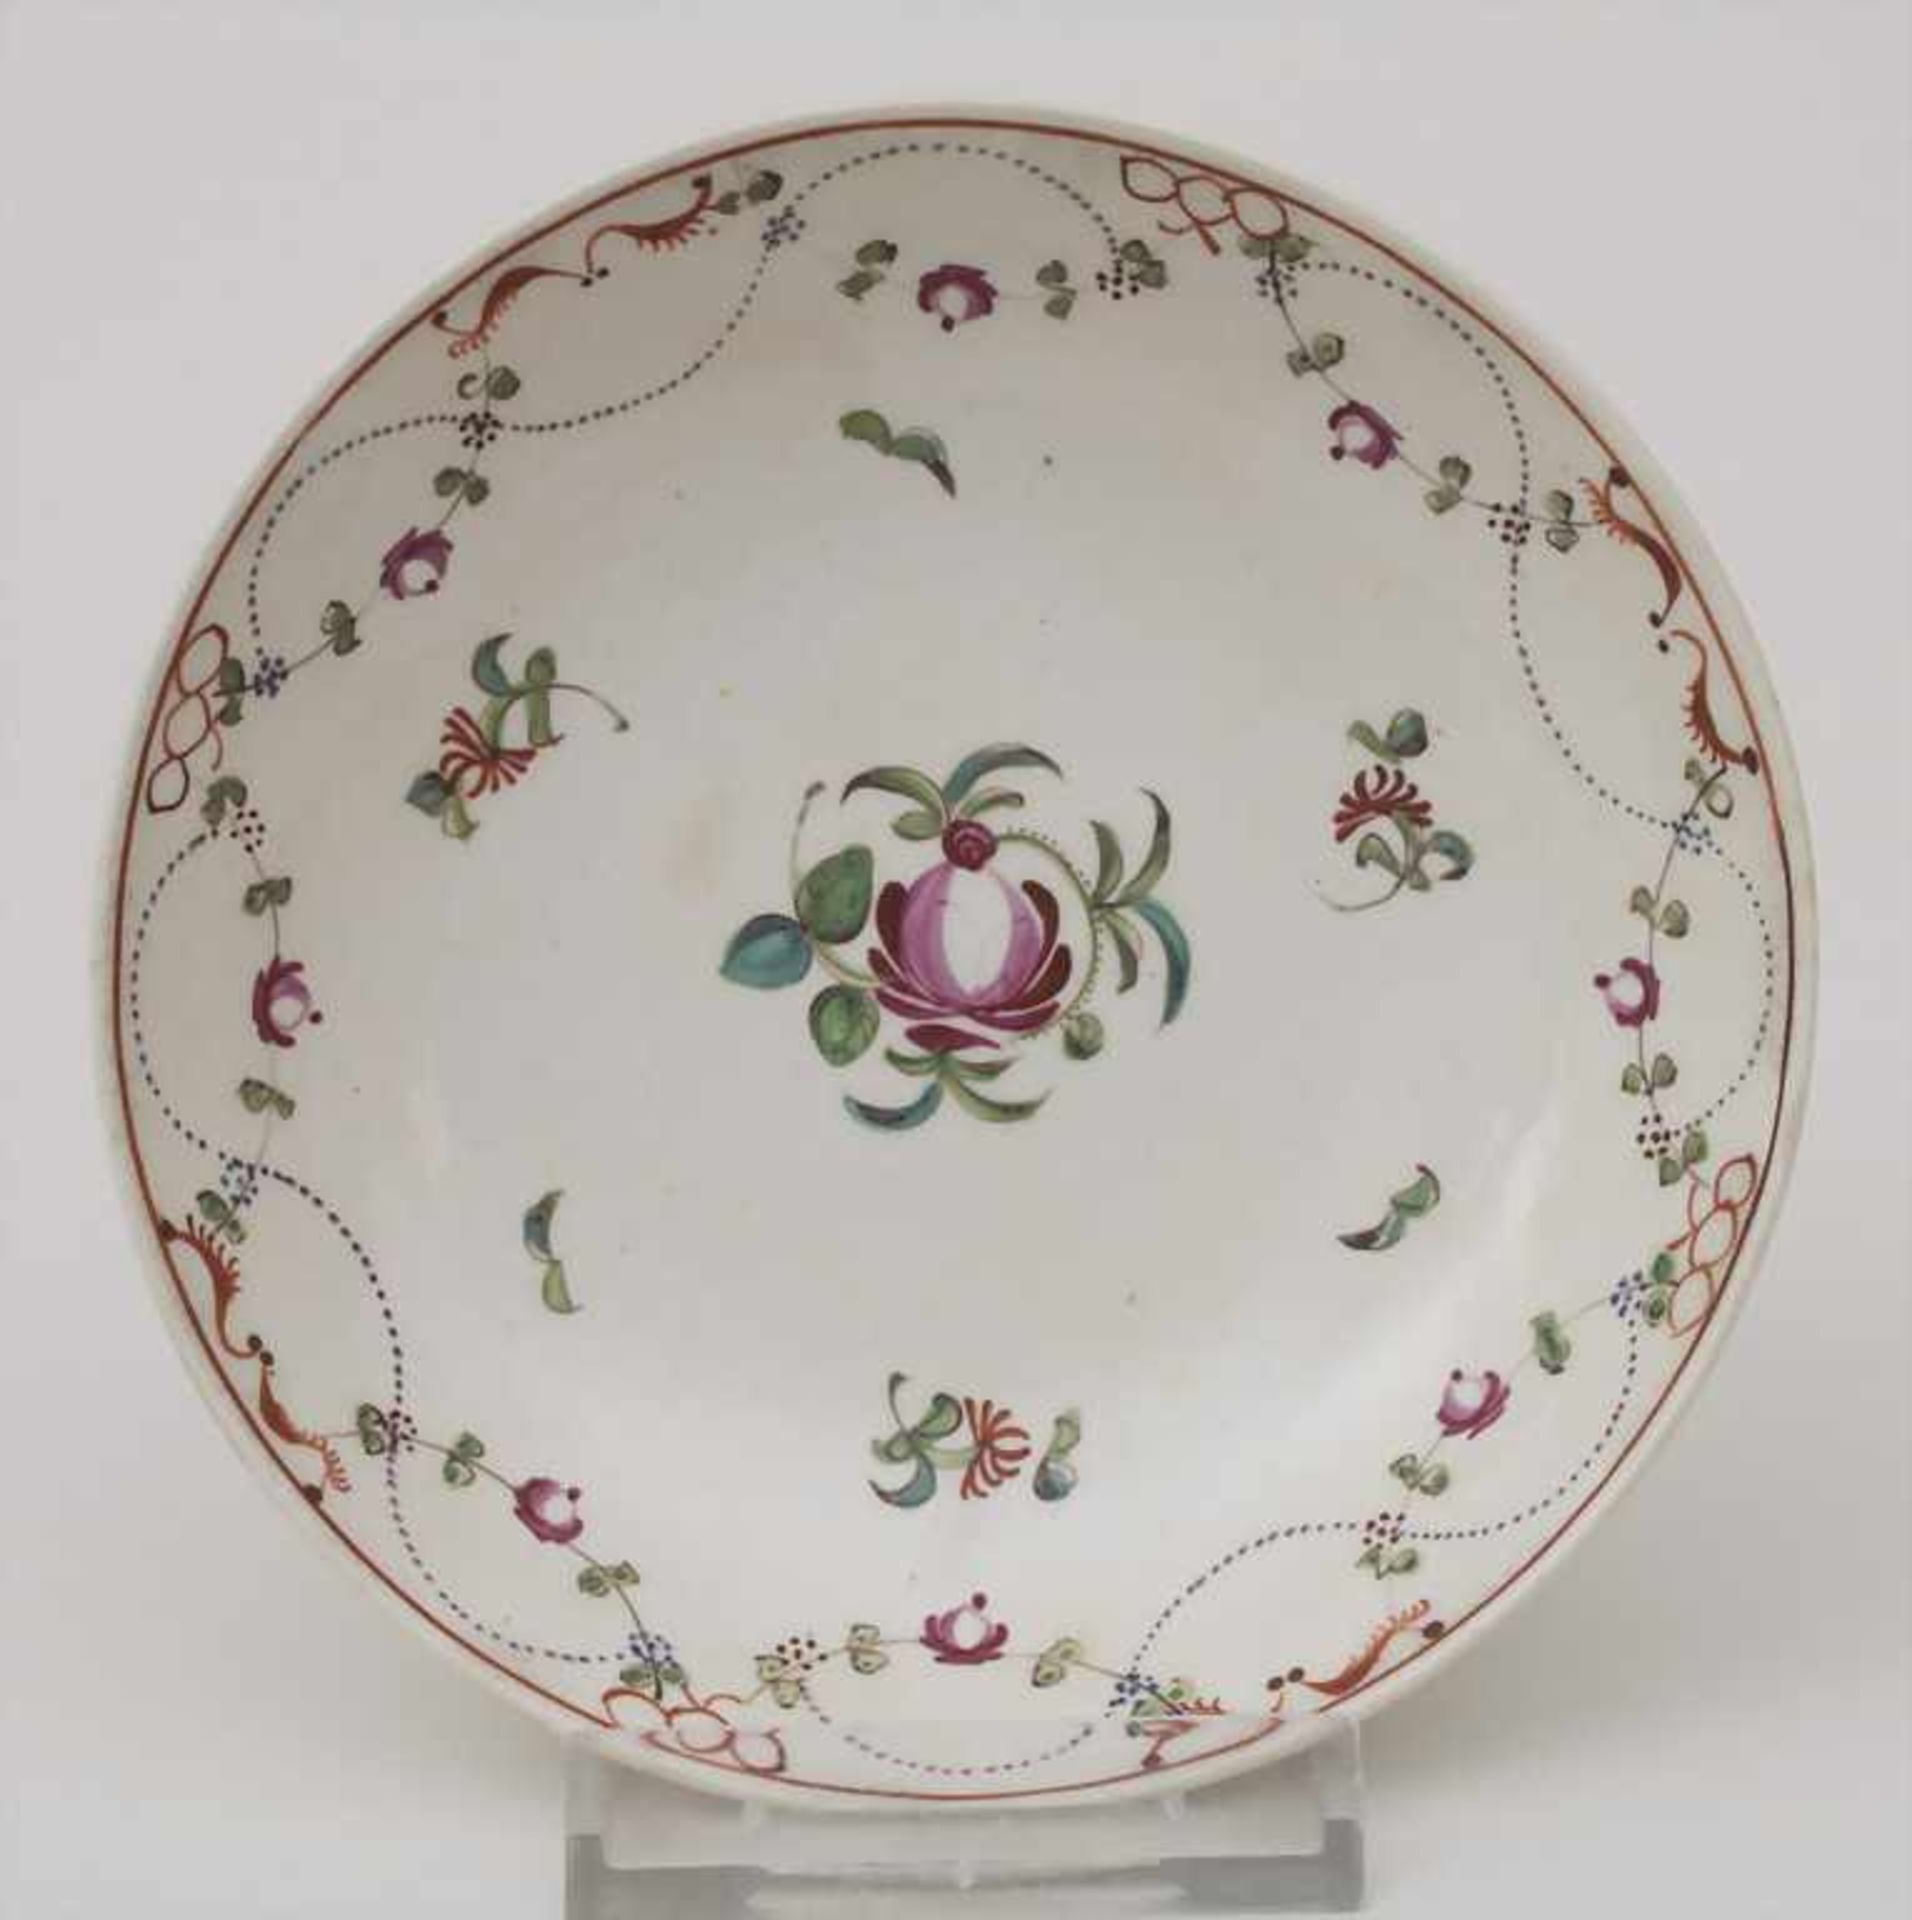 Creamware Unterschale / A creamware / pearlware dish / faience fine, wohl England, um 1800